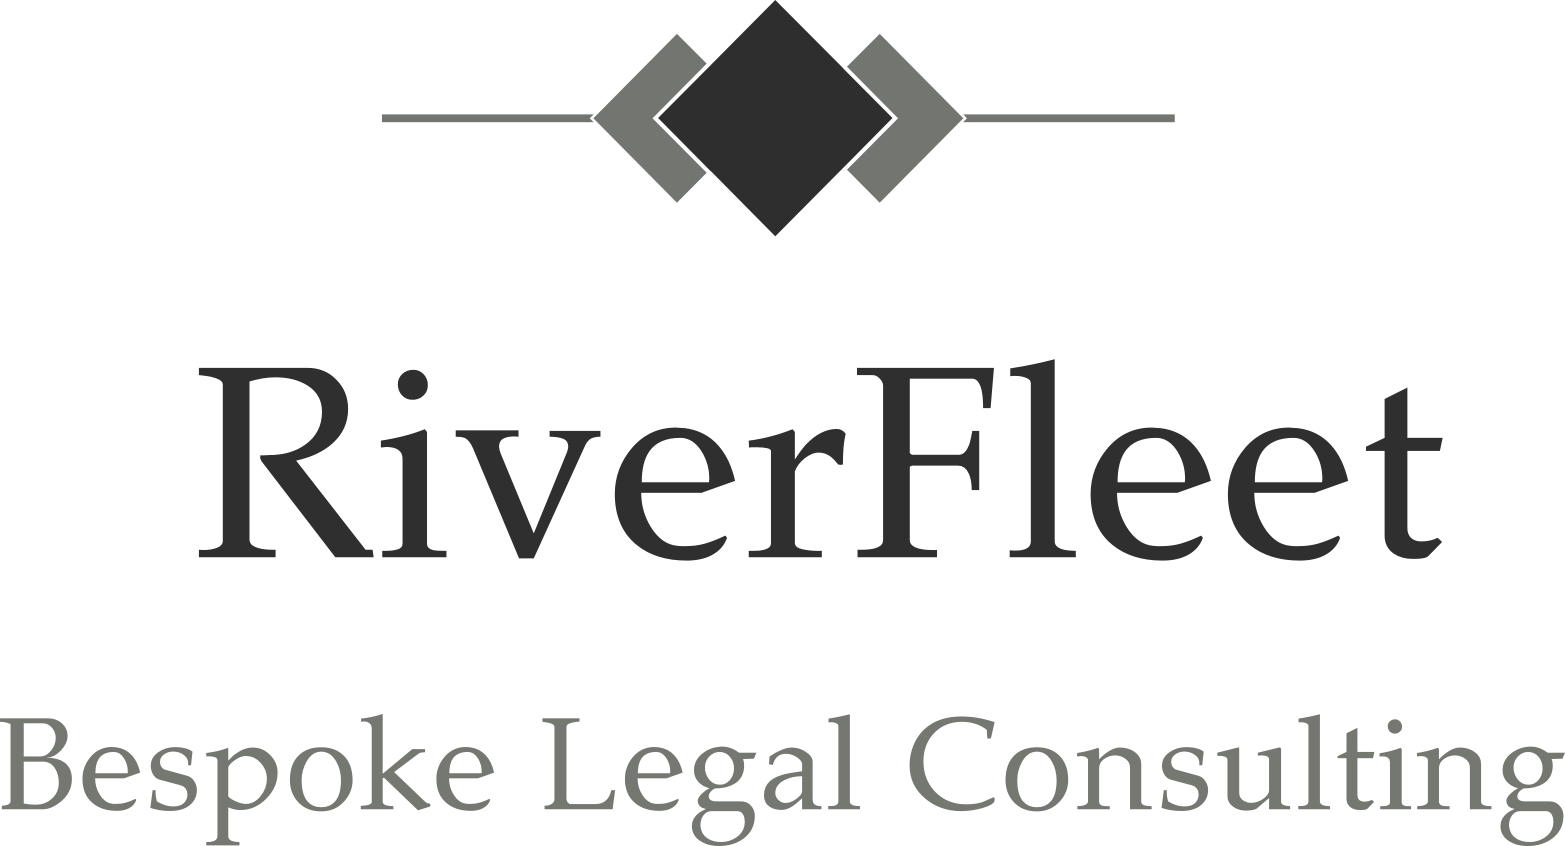 River Fleet | Bespoke Legal Consulting